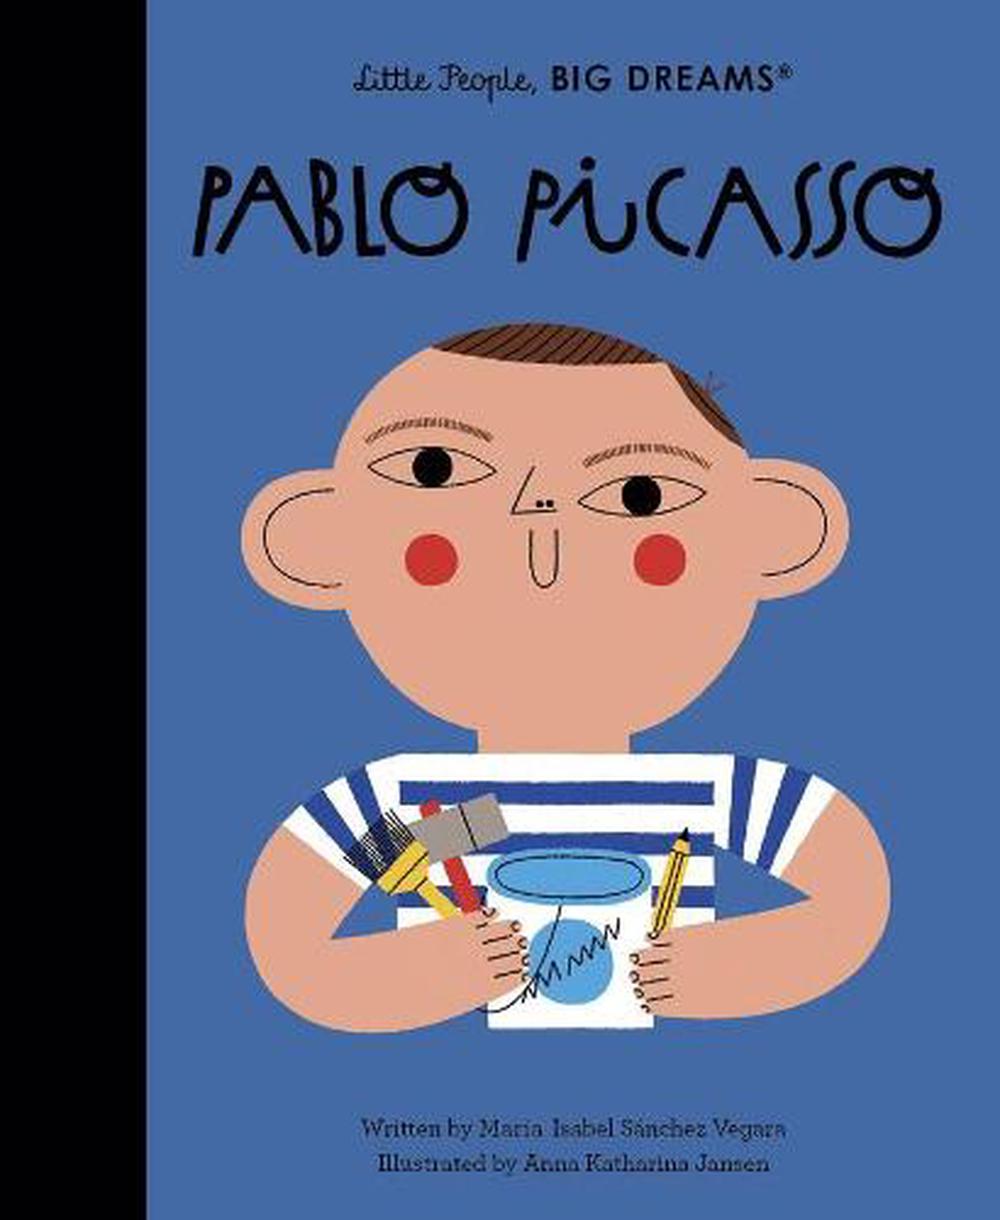 Pablo Picasso: Volume 73 - Little People, Big Dreams